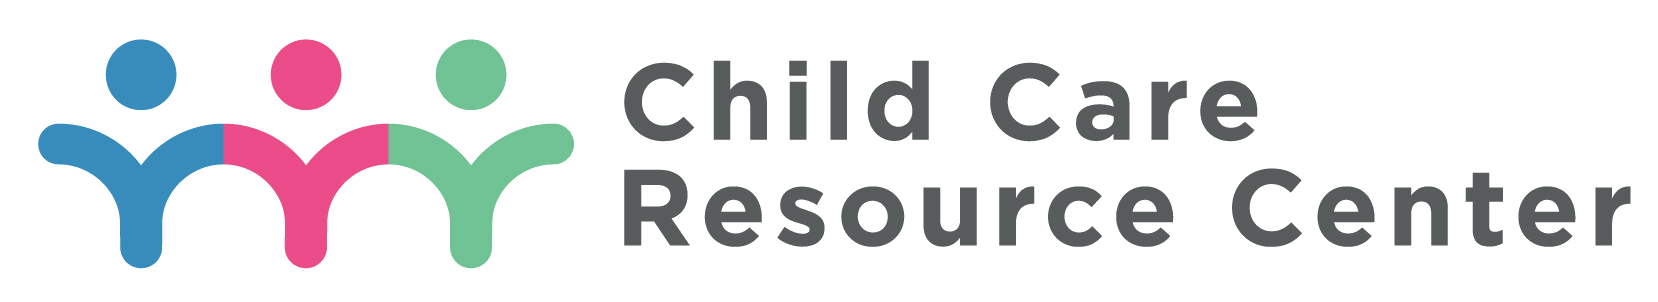 Child Care - Work Family Resource Center - Winston-Salem - NC